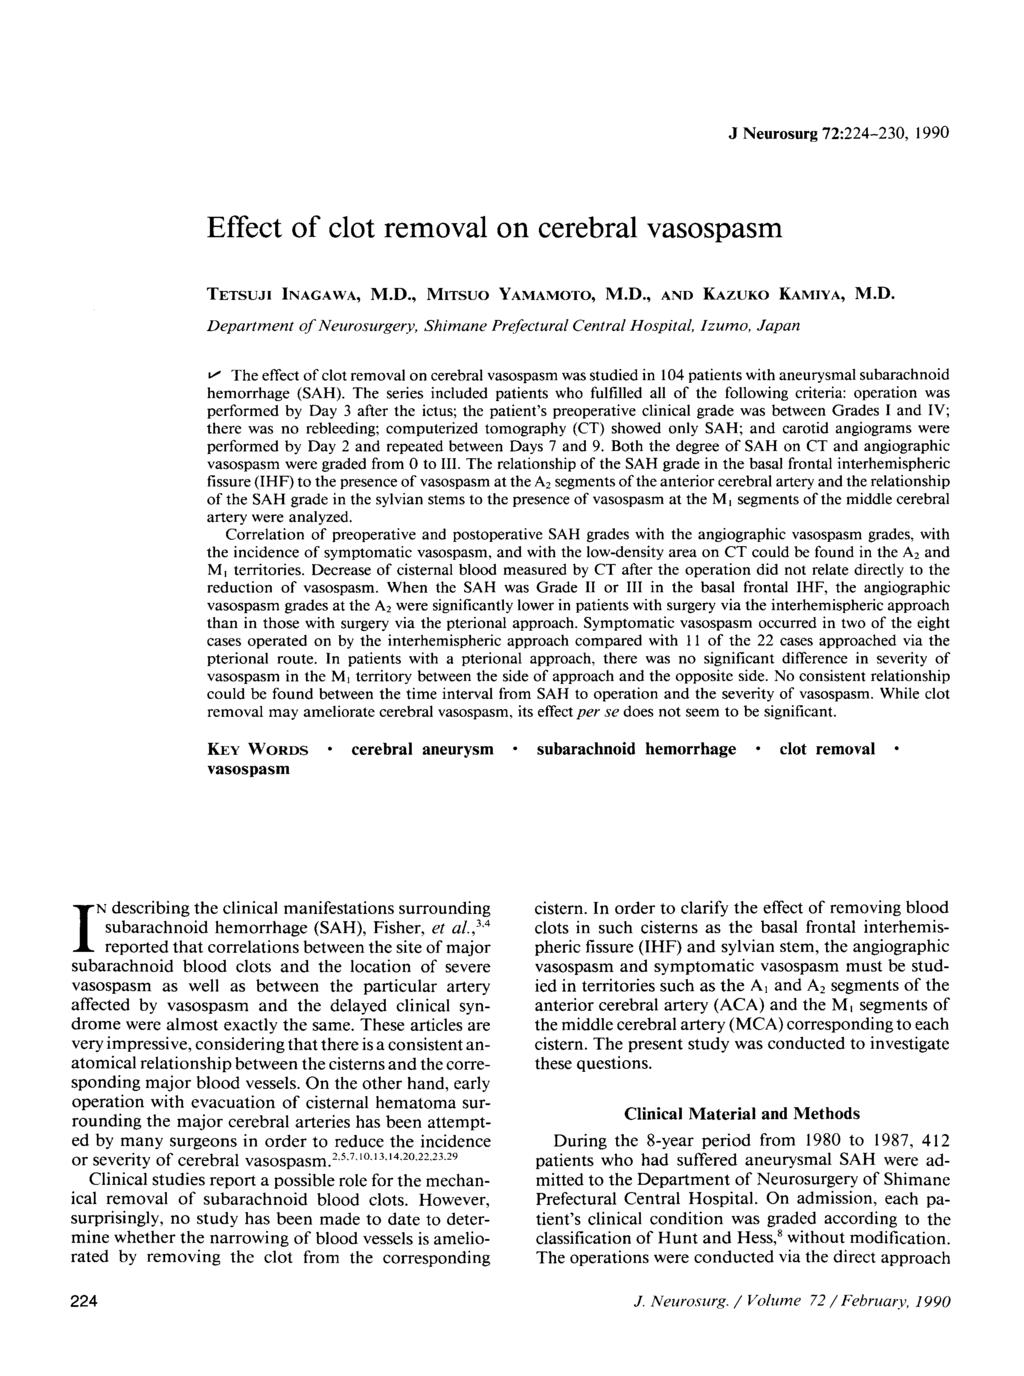 J Neurosurg 72:224-230, 1990 Effect of clot removal on cerebral vasospasm TETSUJI INAGAWA, M.D.